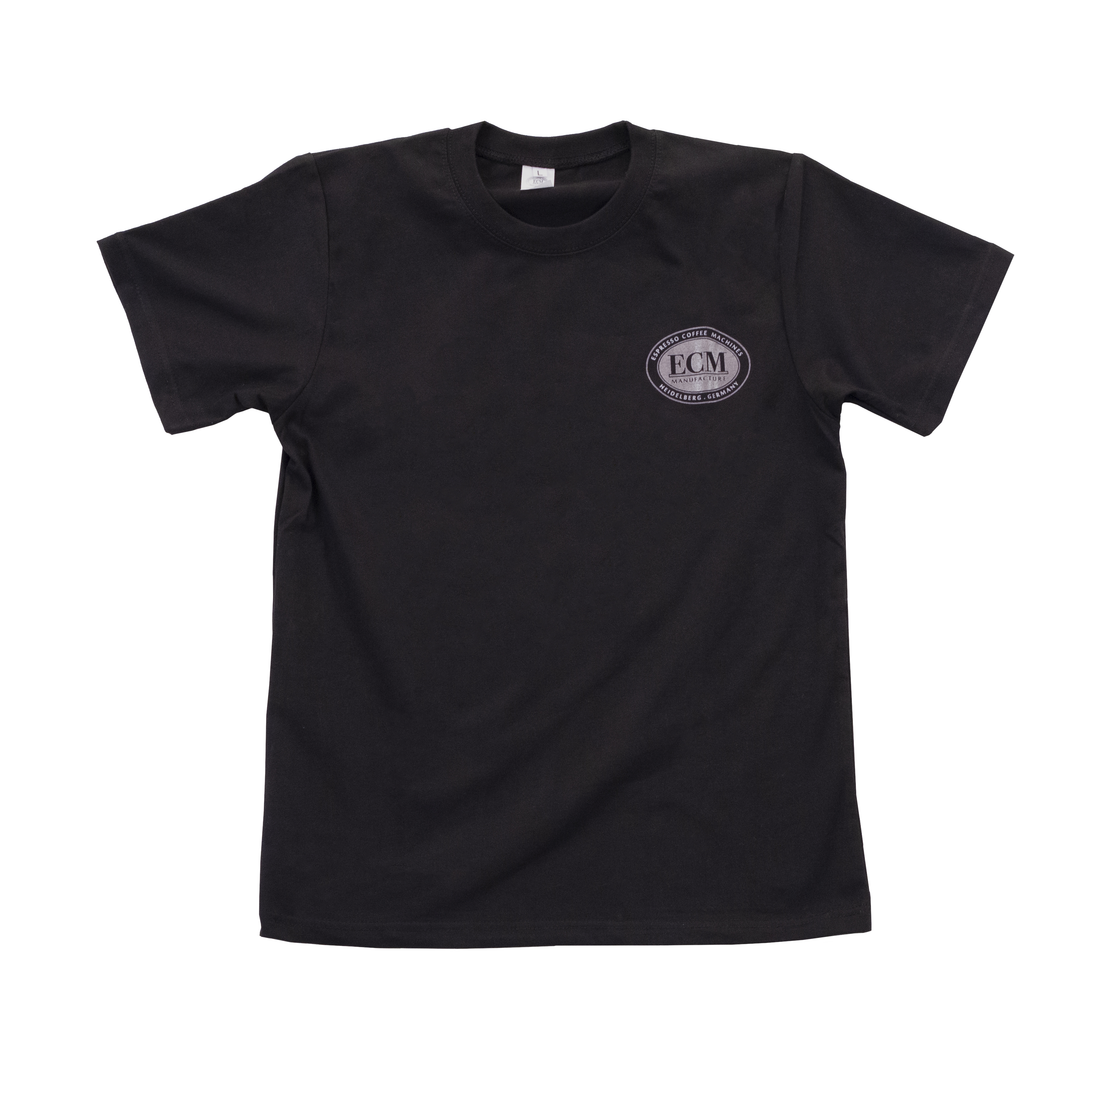 ECM Black Logo T-Shirt - Size M